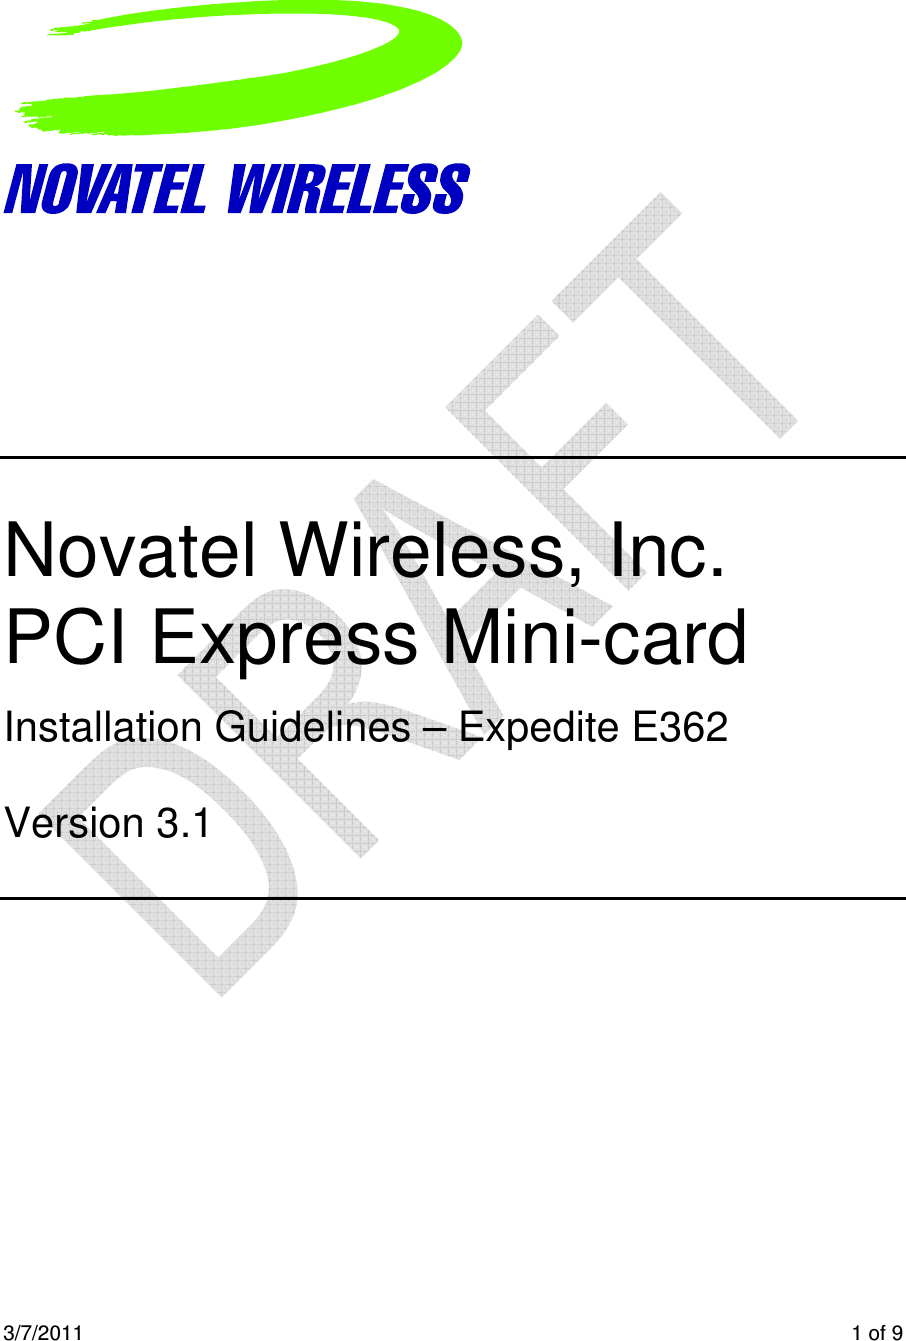  3/7/2011    1 of 9                 Novatel Wireless, Inc. PCI Express Mini-card  Installation Guidelines – Expedite E362  Version 3.1     